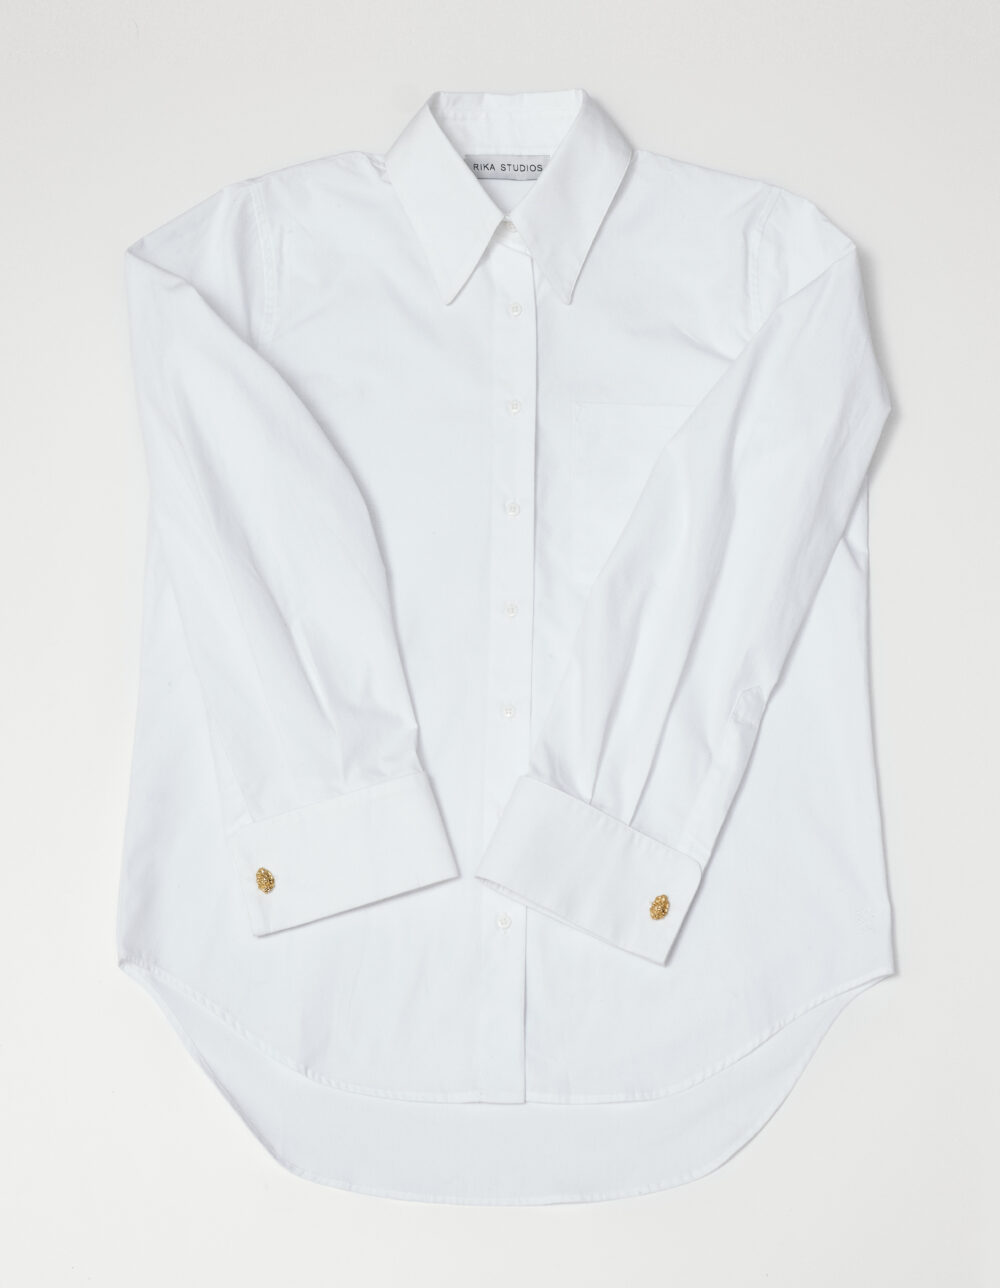 Elhanati x RIKA studios White Orit shirt